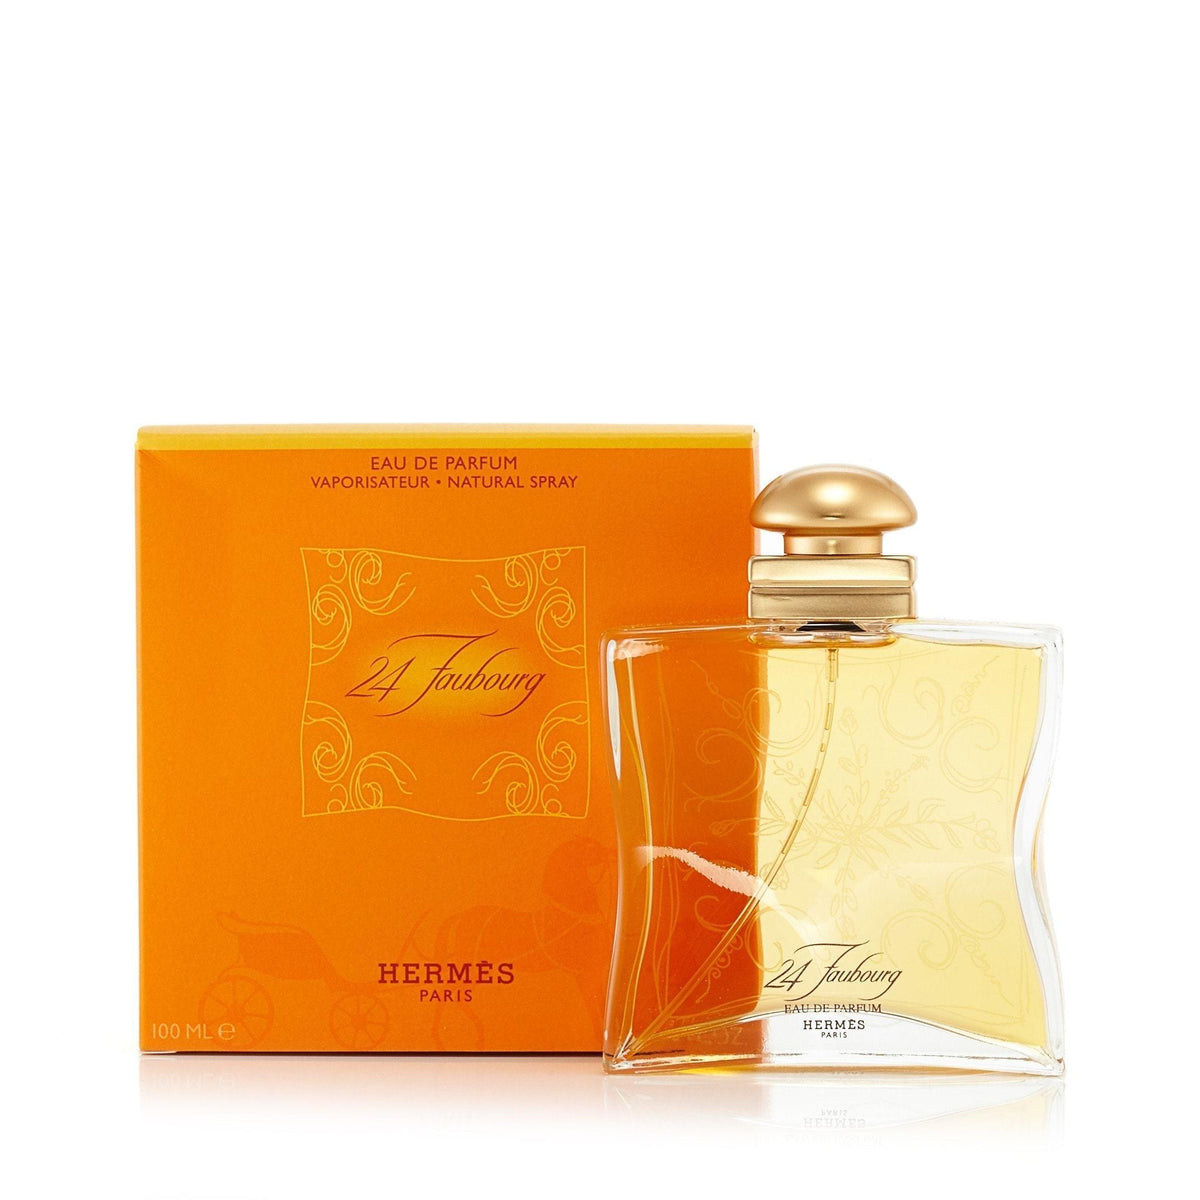 24 Faubourg Eau de Parfum Spray for Women by Hermes 3.3 oz.